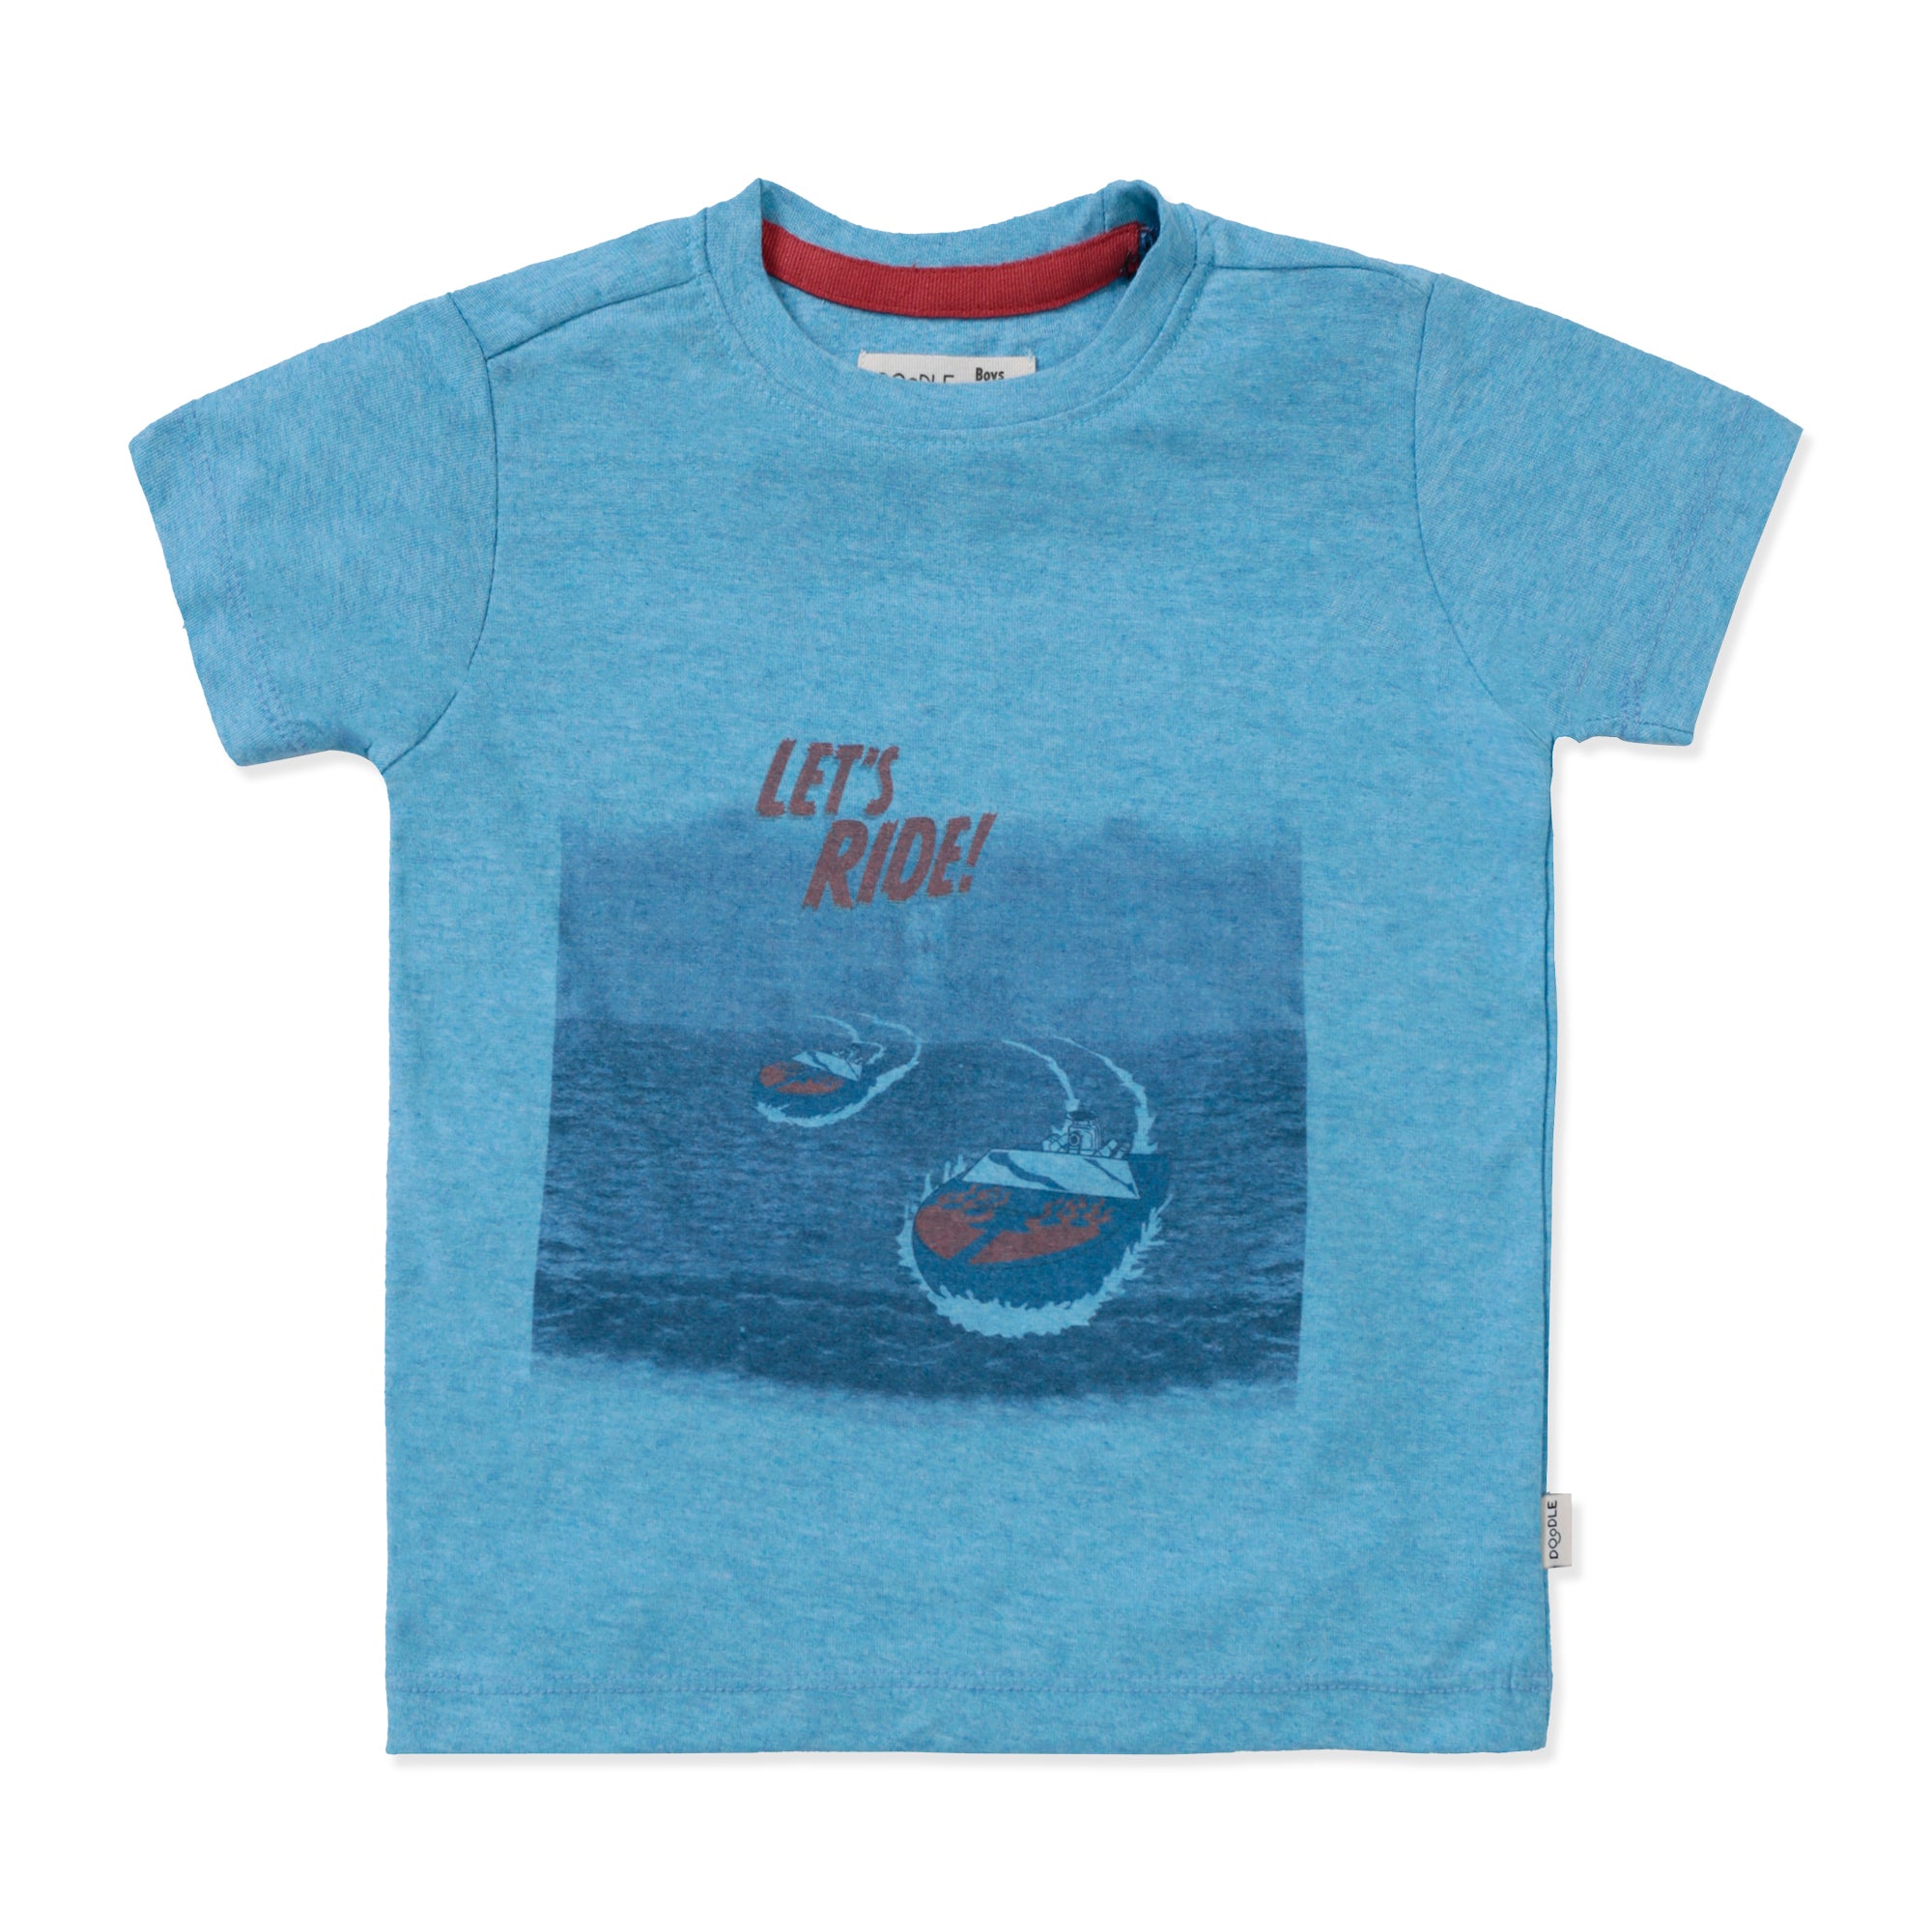 Sky Blue "Let'S Ride" Graphic T-Shirt